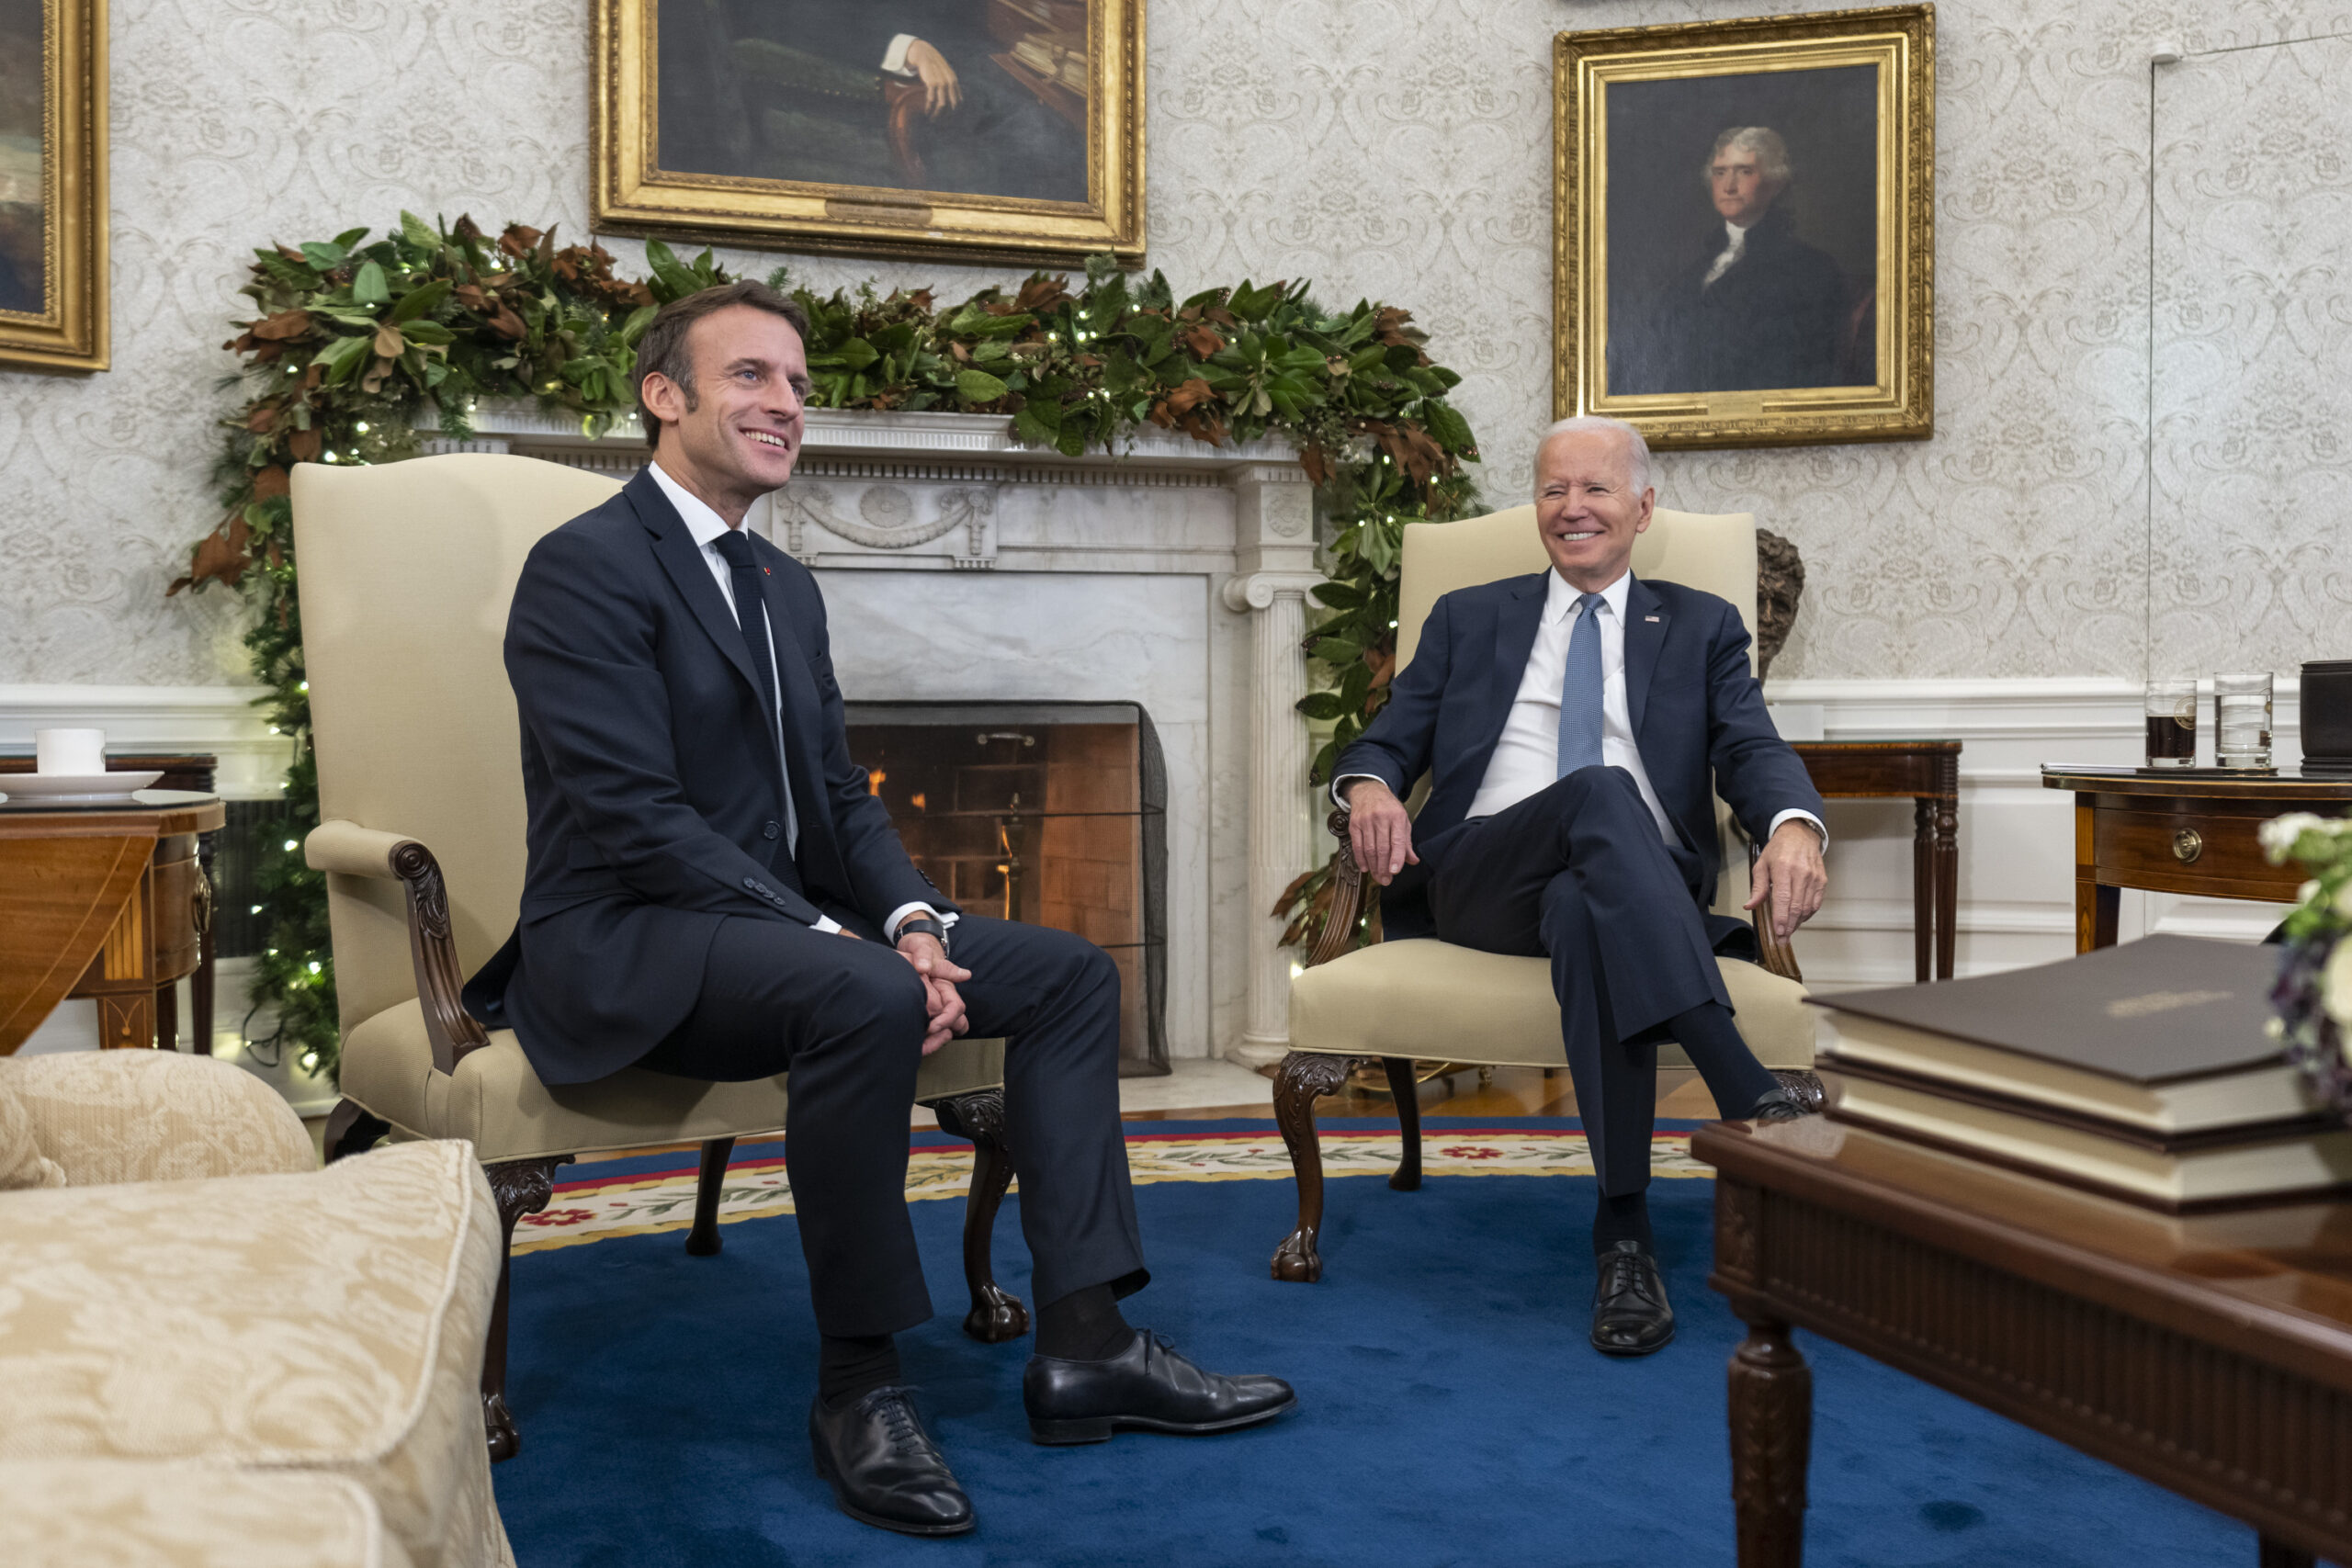 Emmanuel Macron and President Joe Biden pose for photographs in the White House.